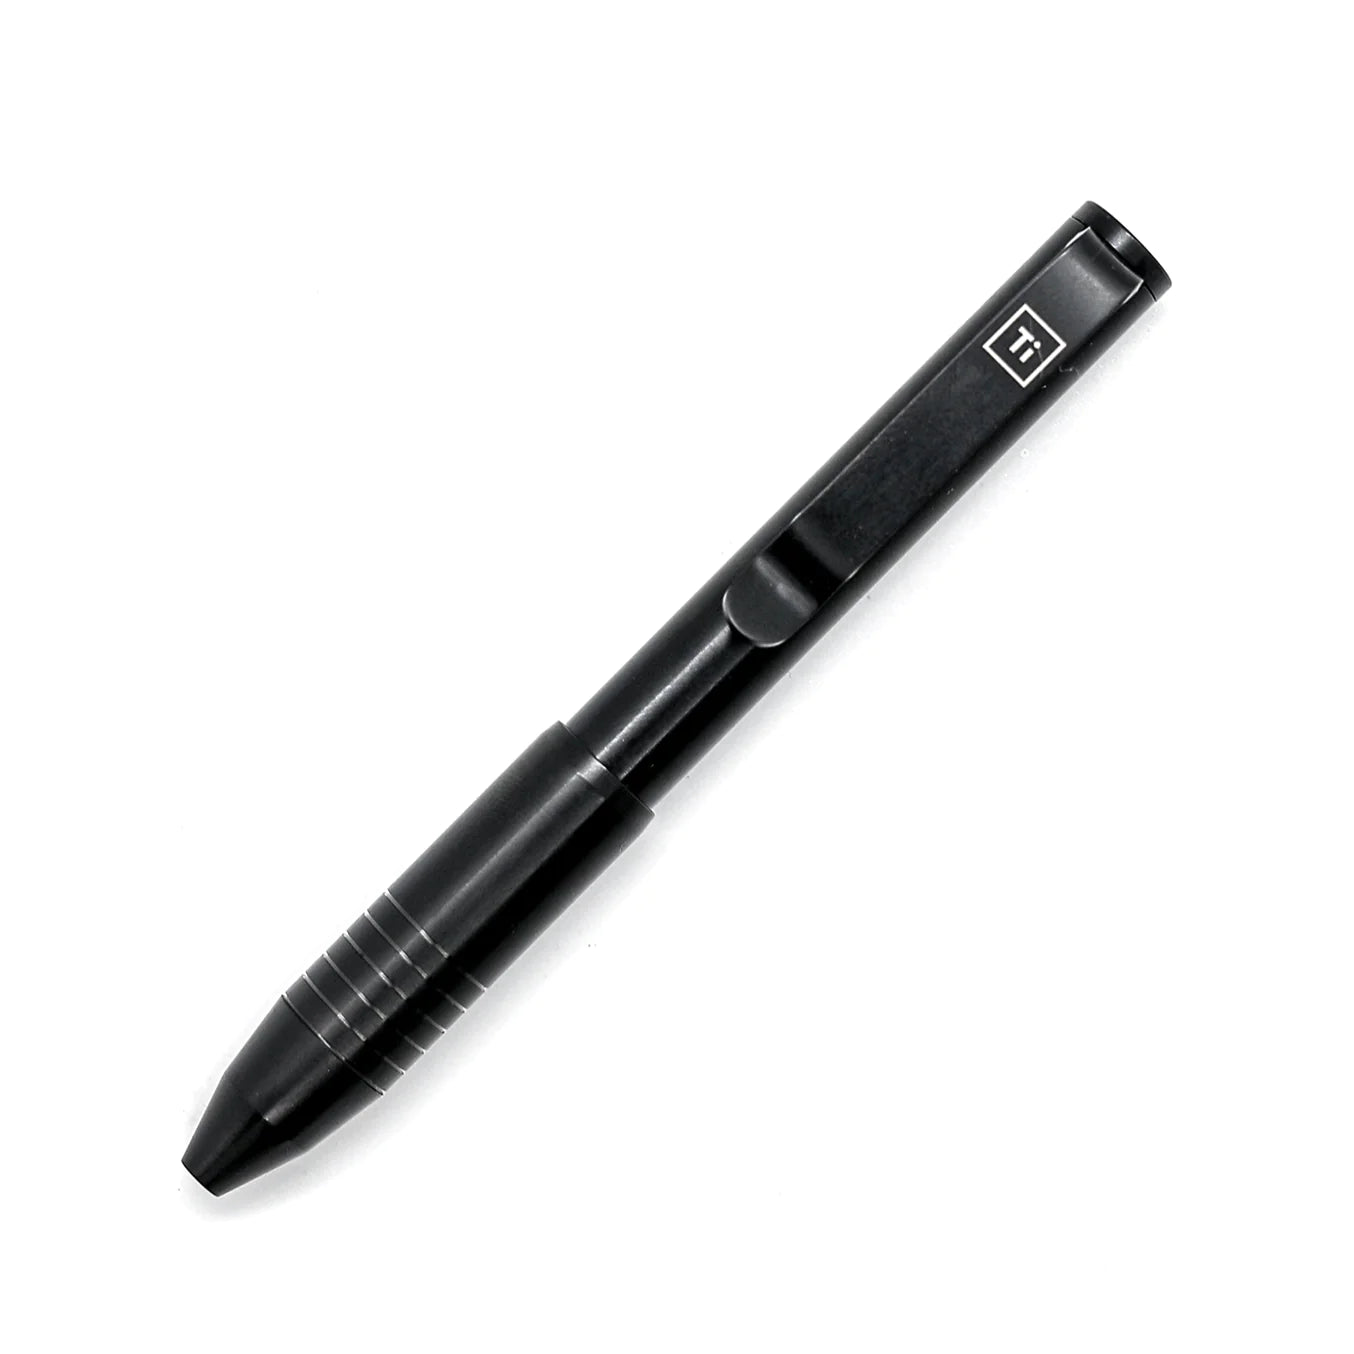 Big Idea Design - Ti Pocket Pro : The Auto Adjusting EDC Pen